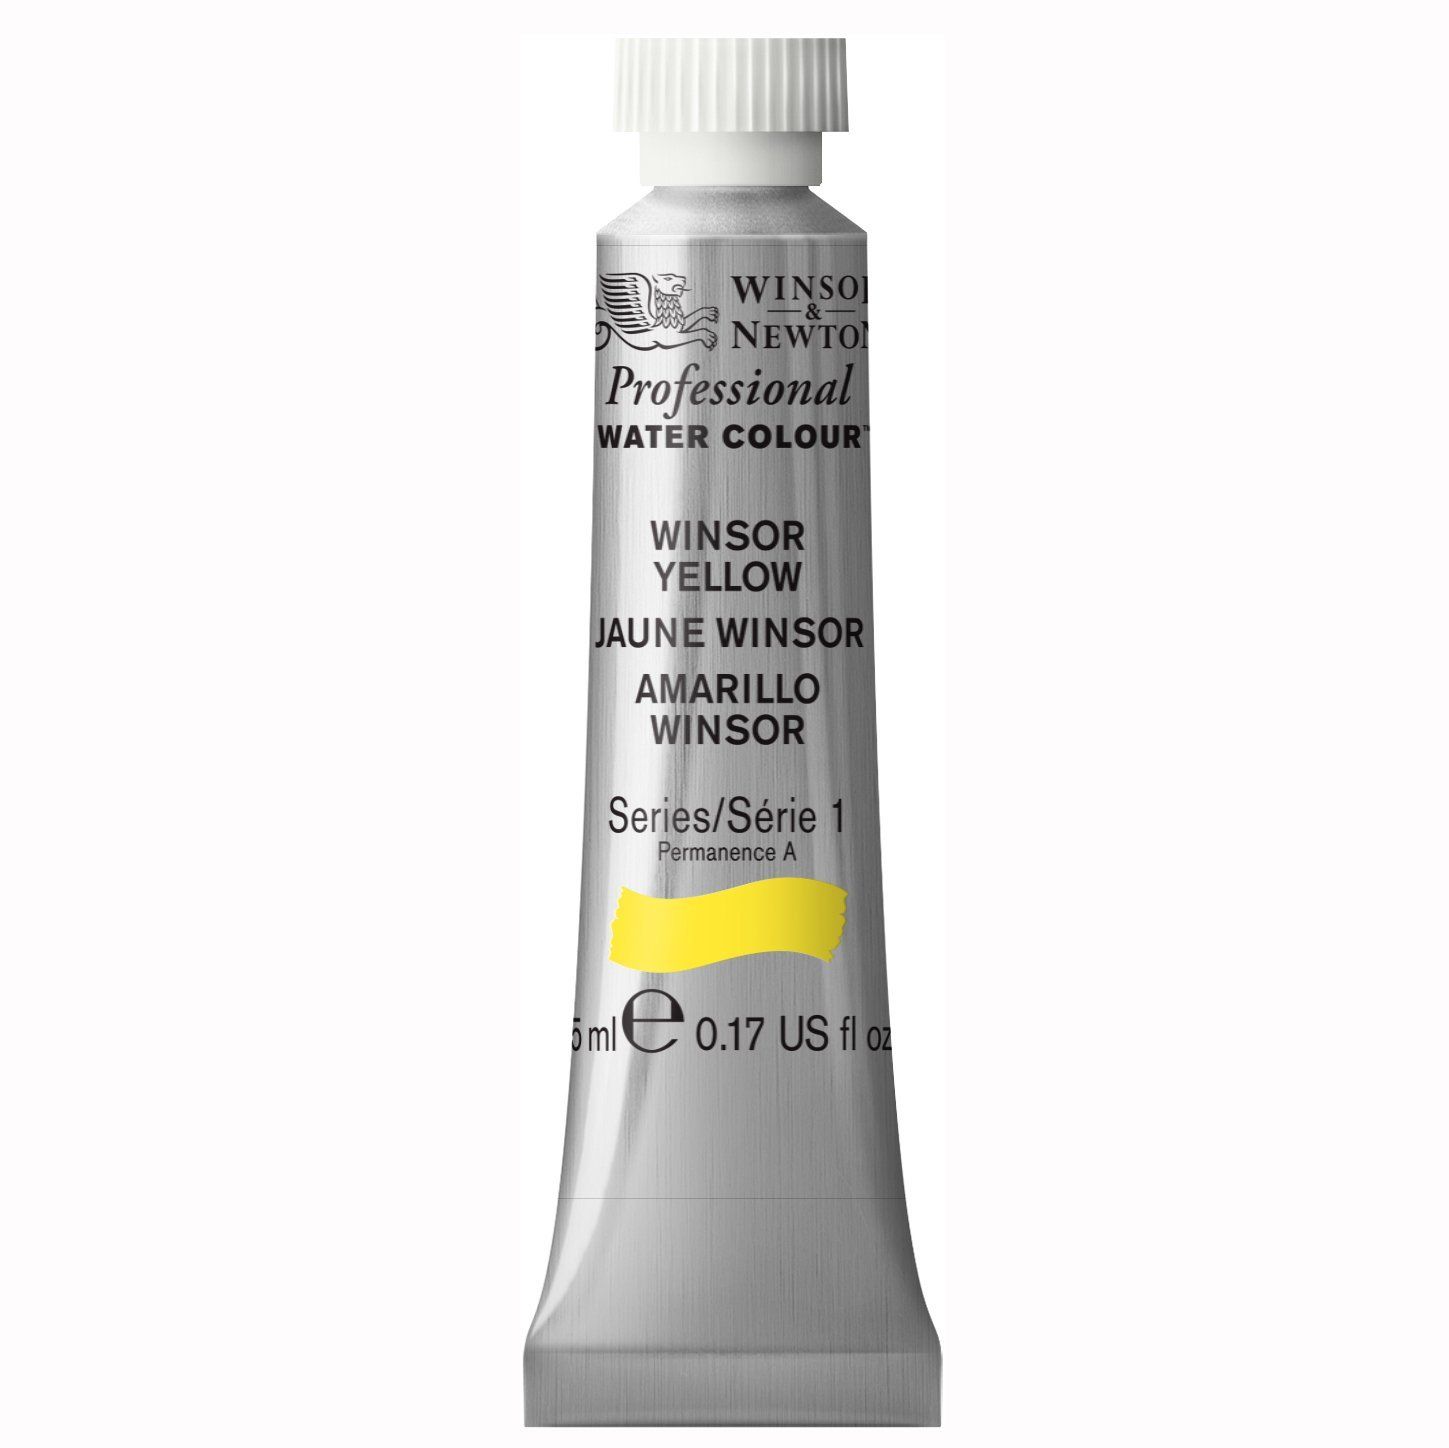 Winsor & Newton Watercolour Paint - Winsor Yellow 5ml